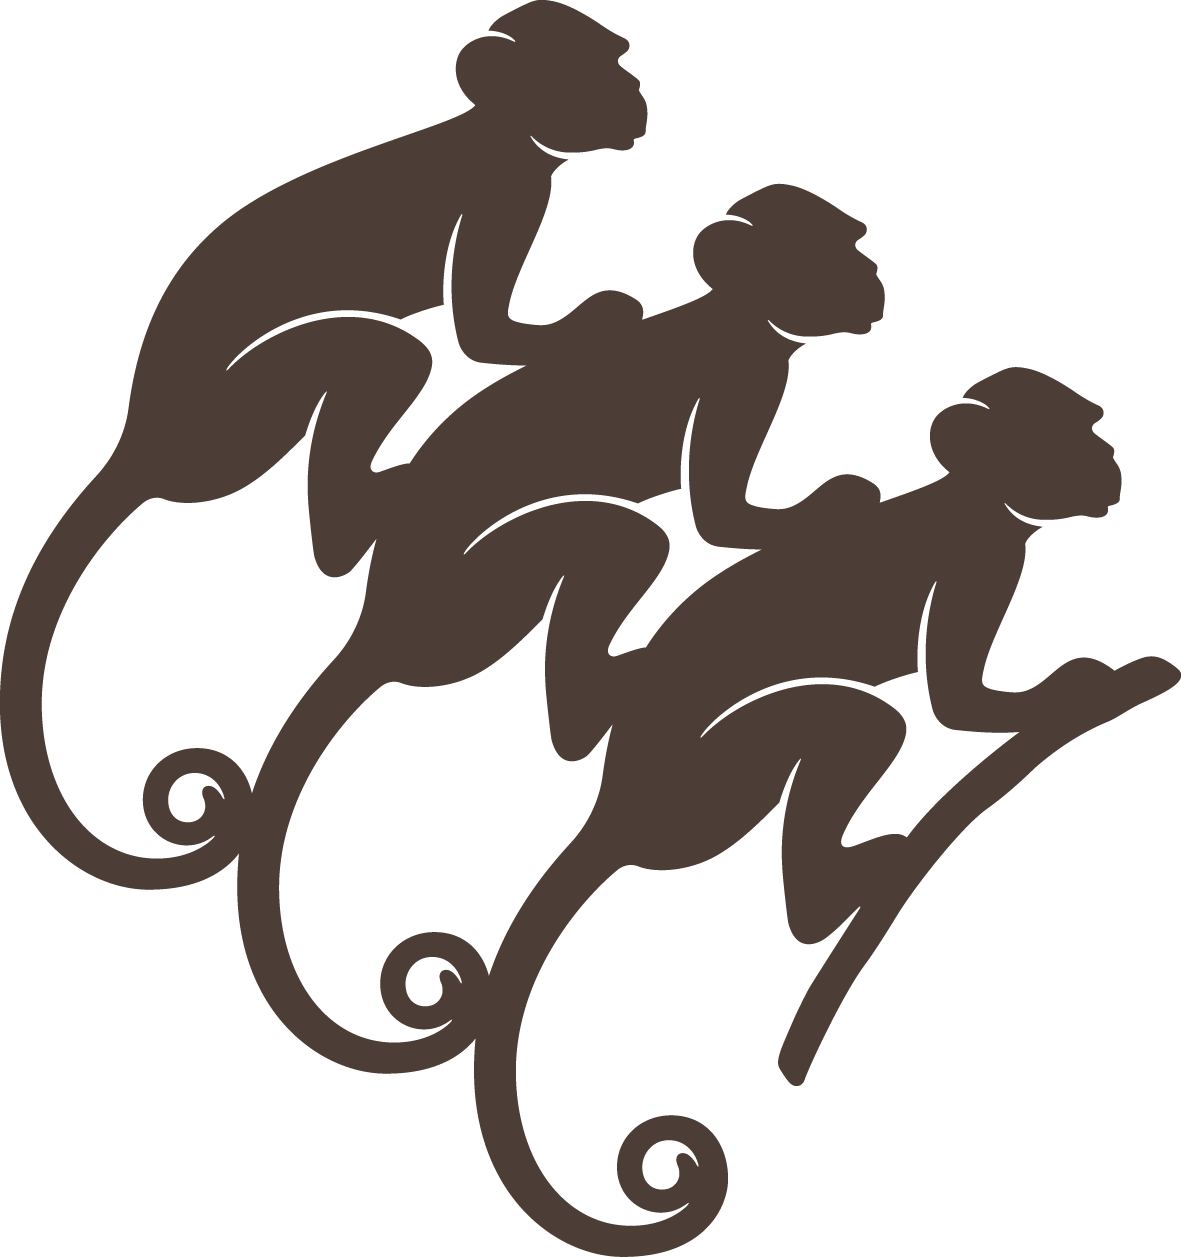 Monkey Shoulder Whiskey Logo - Download Sponsors, Exhibitors & Partners - Monkey Shoulder Whiskey ...